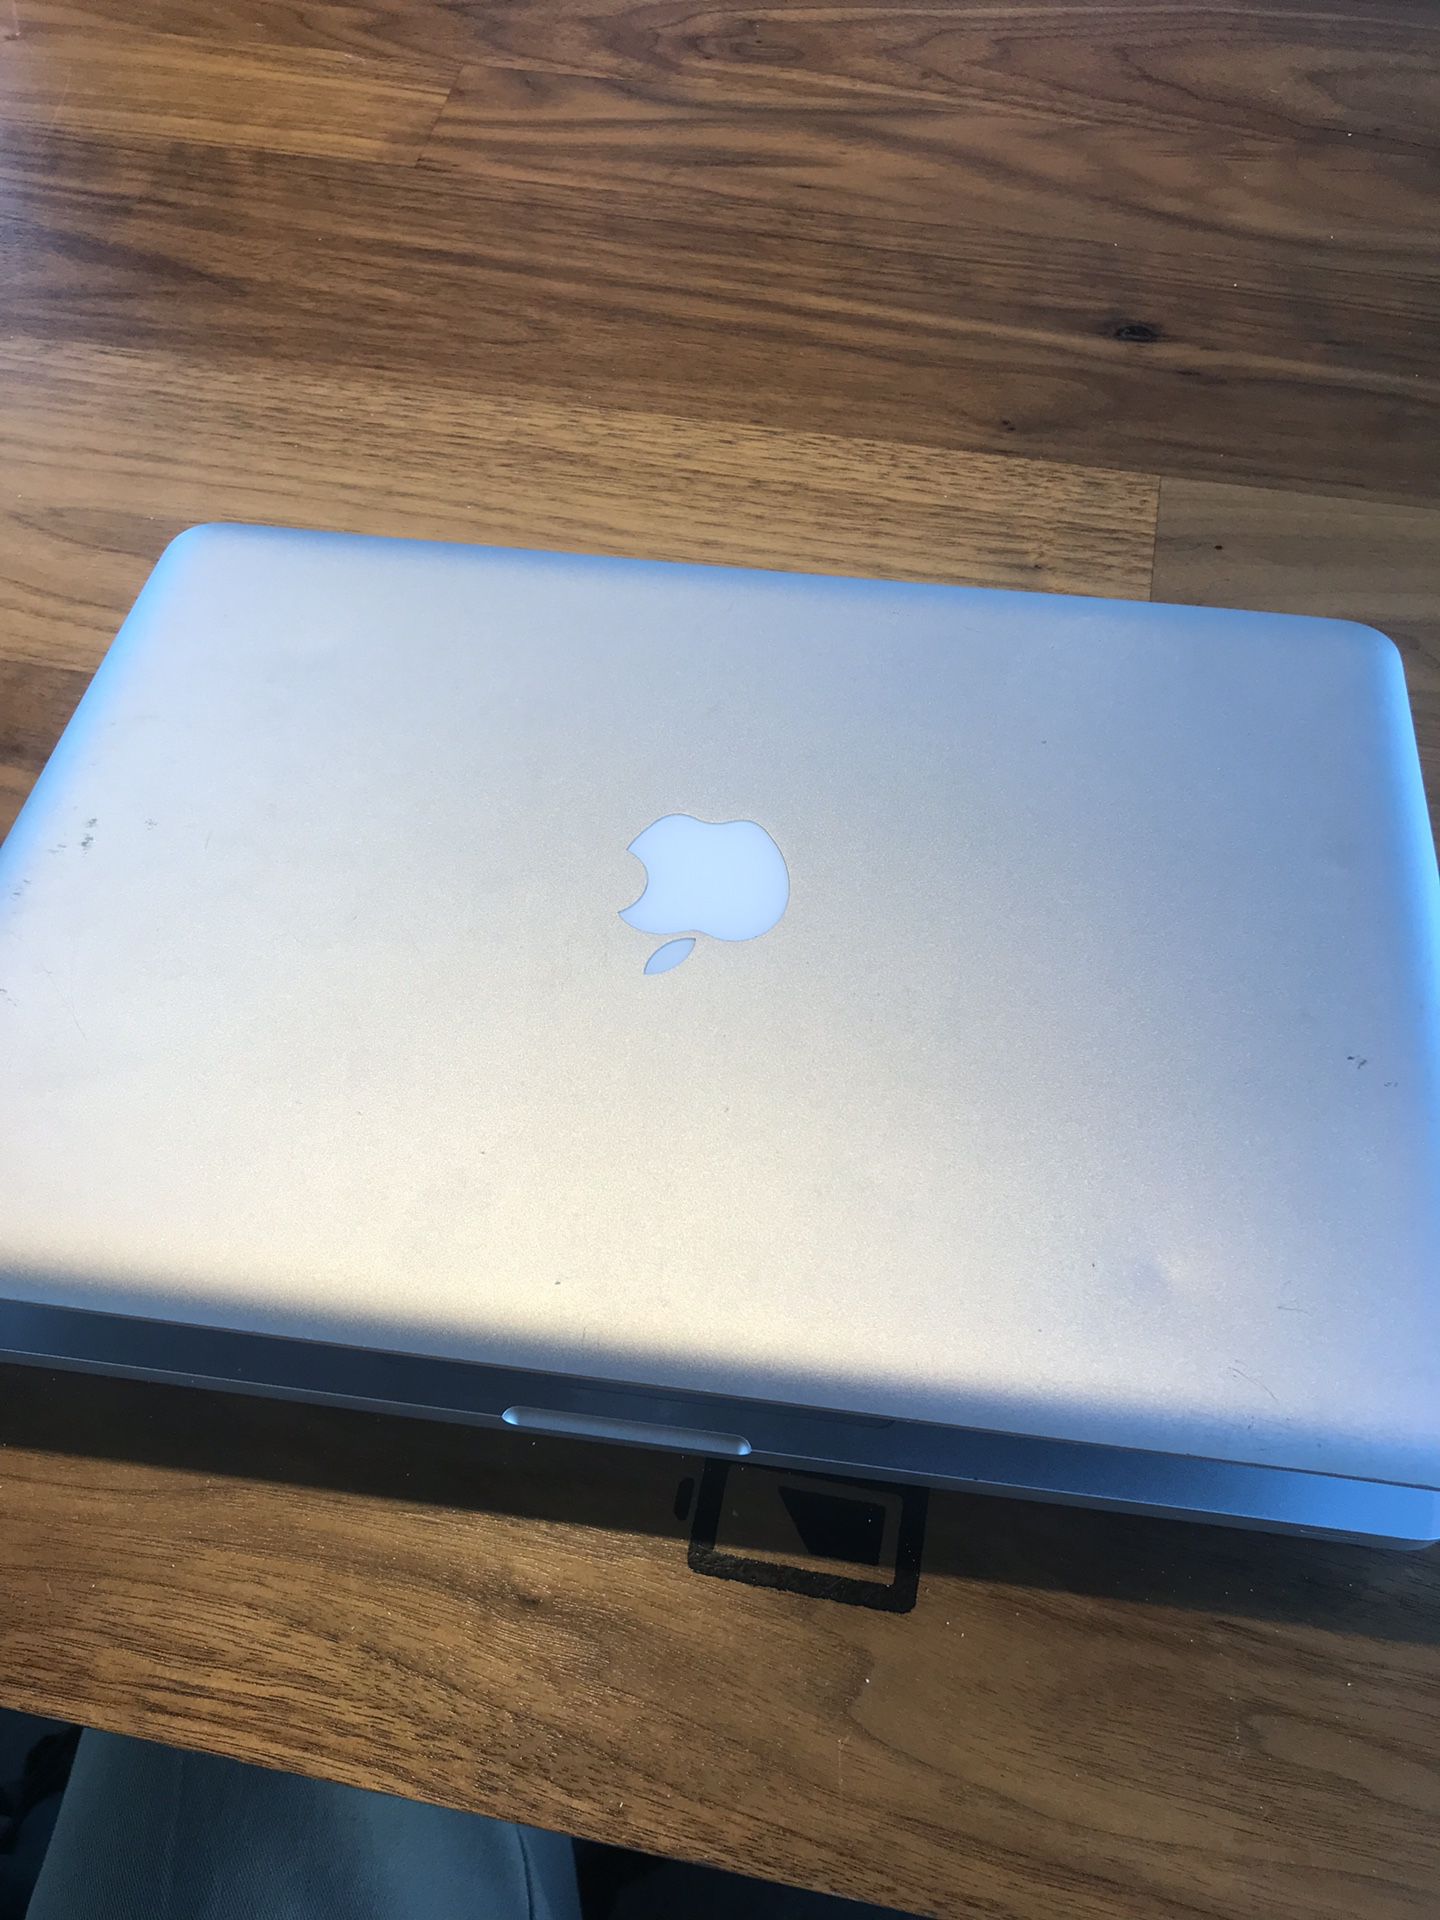 Macbook Pro 13” (Mid 2012)